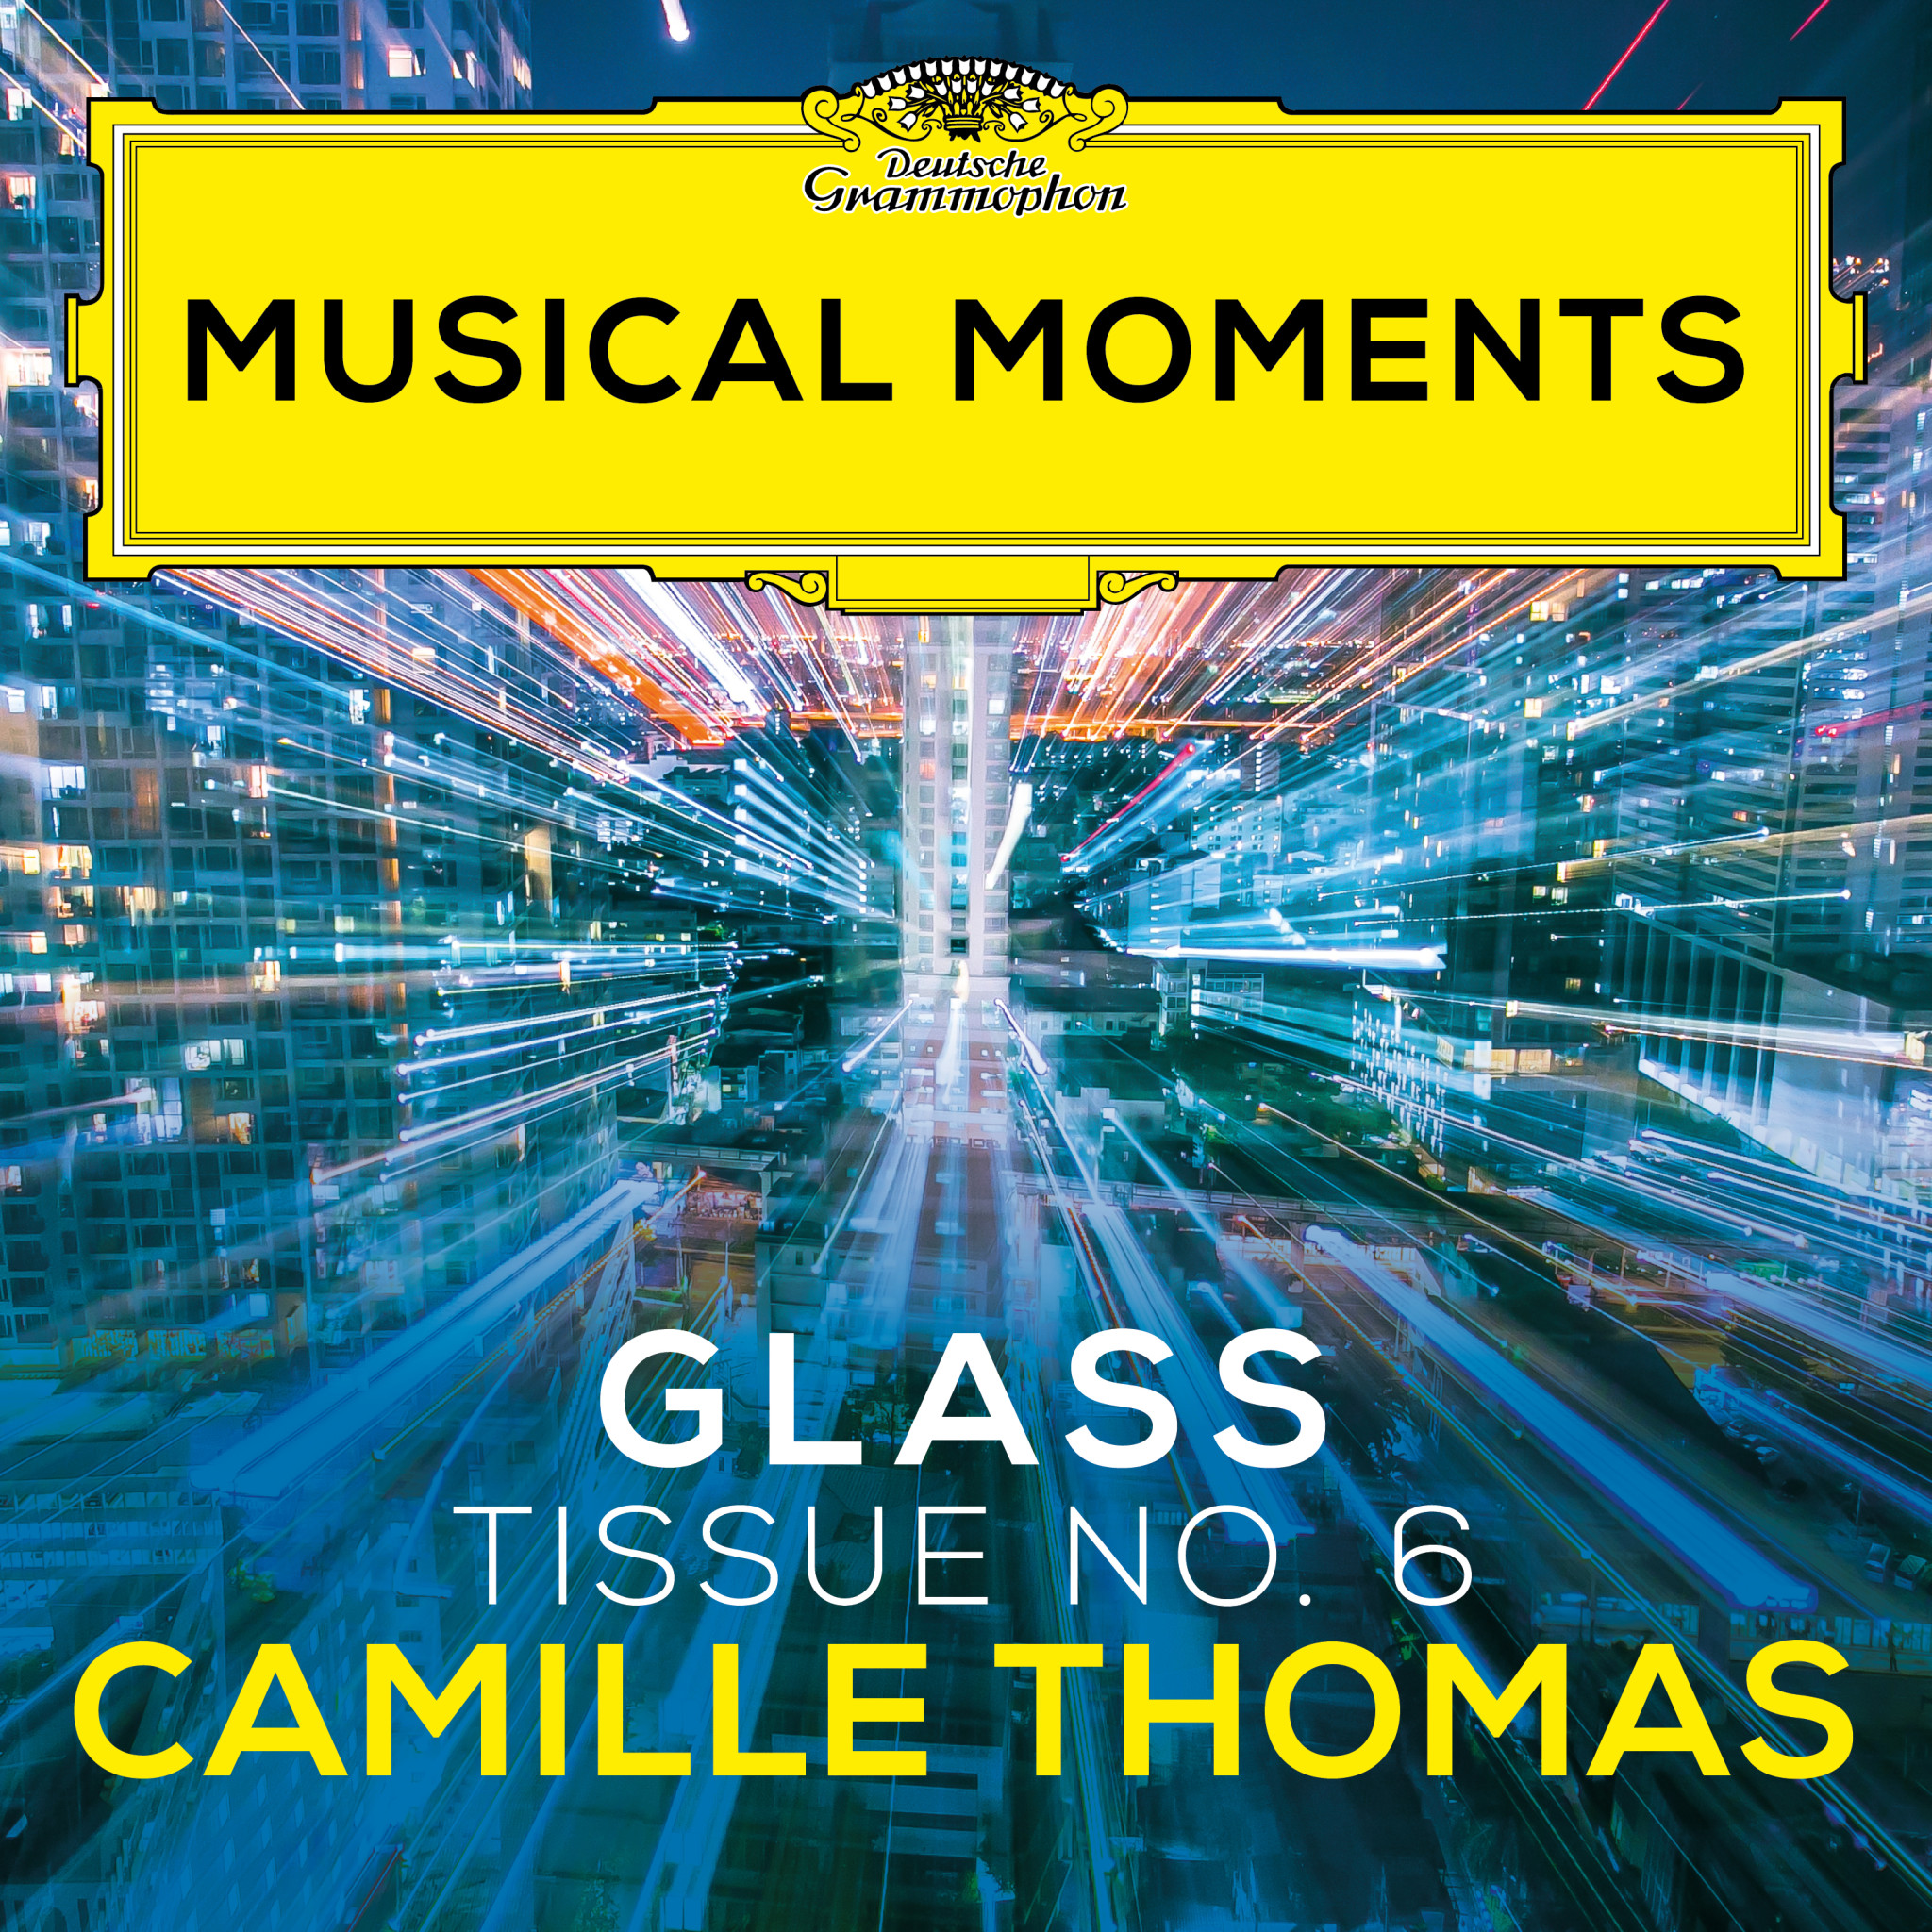 Camille Thomas - Glass: Tissue No. 6 Cover